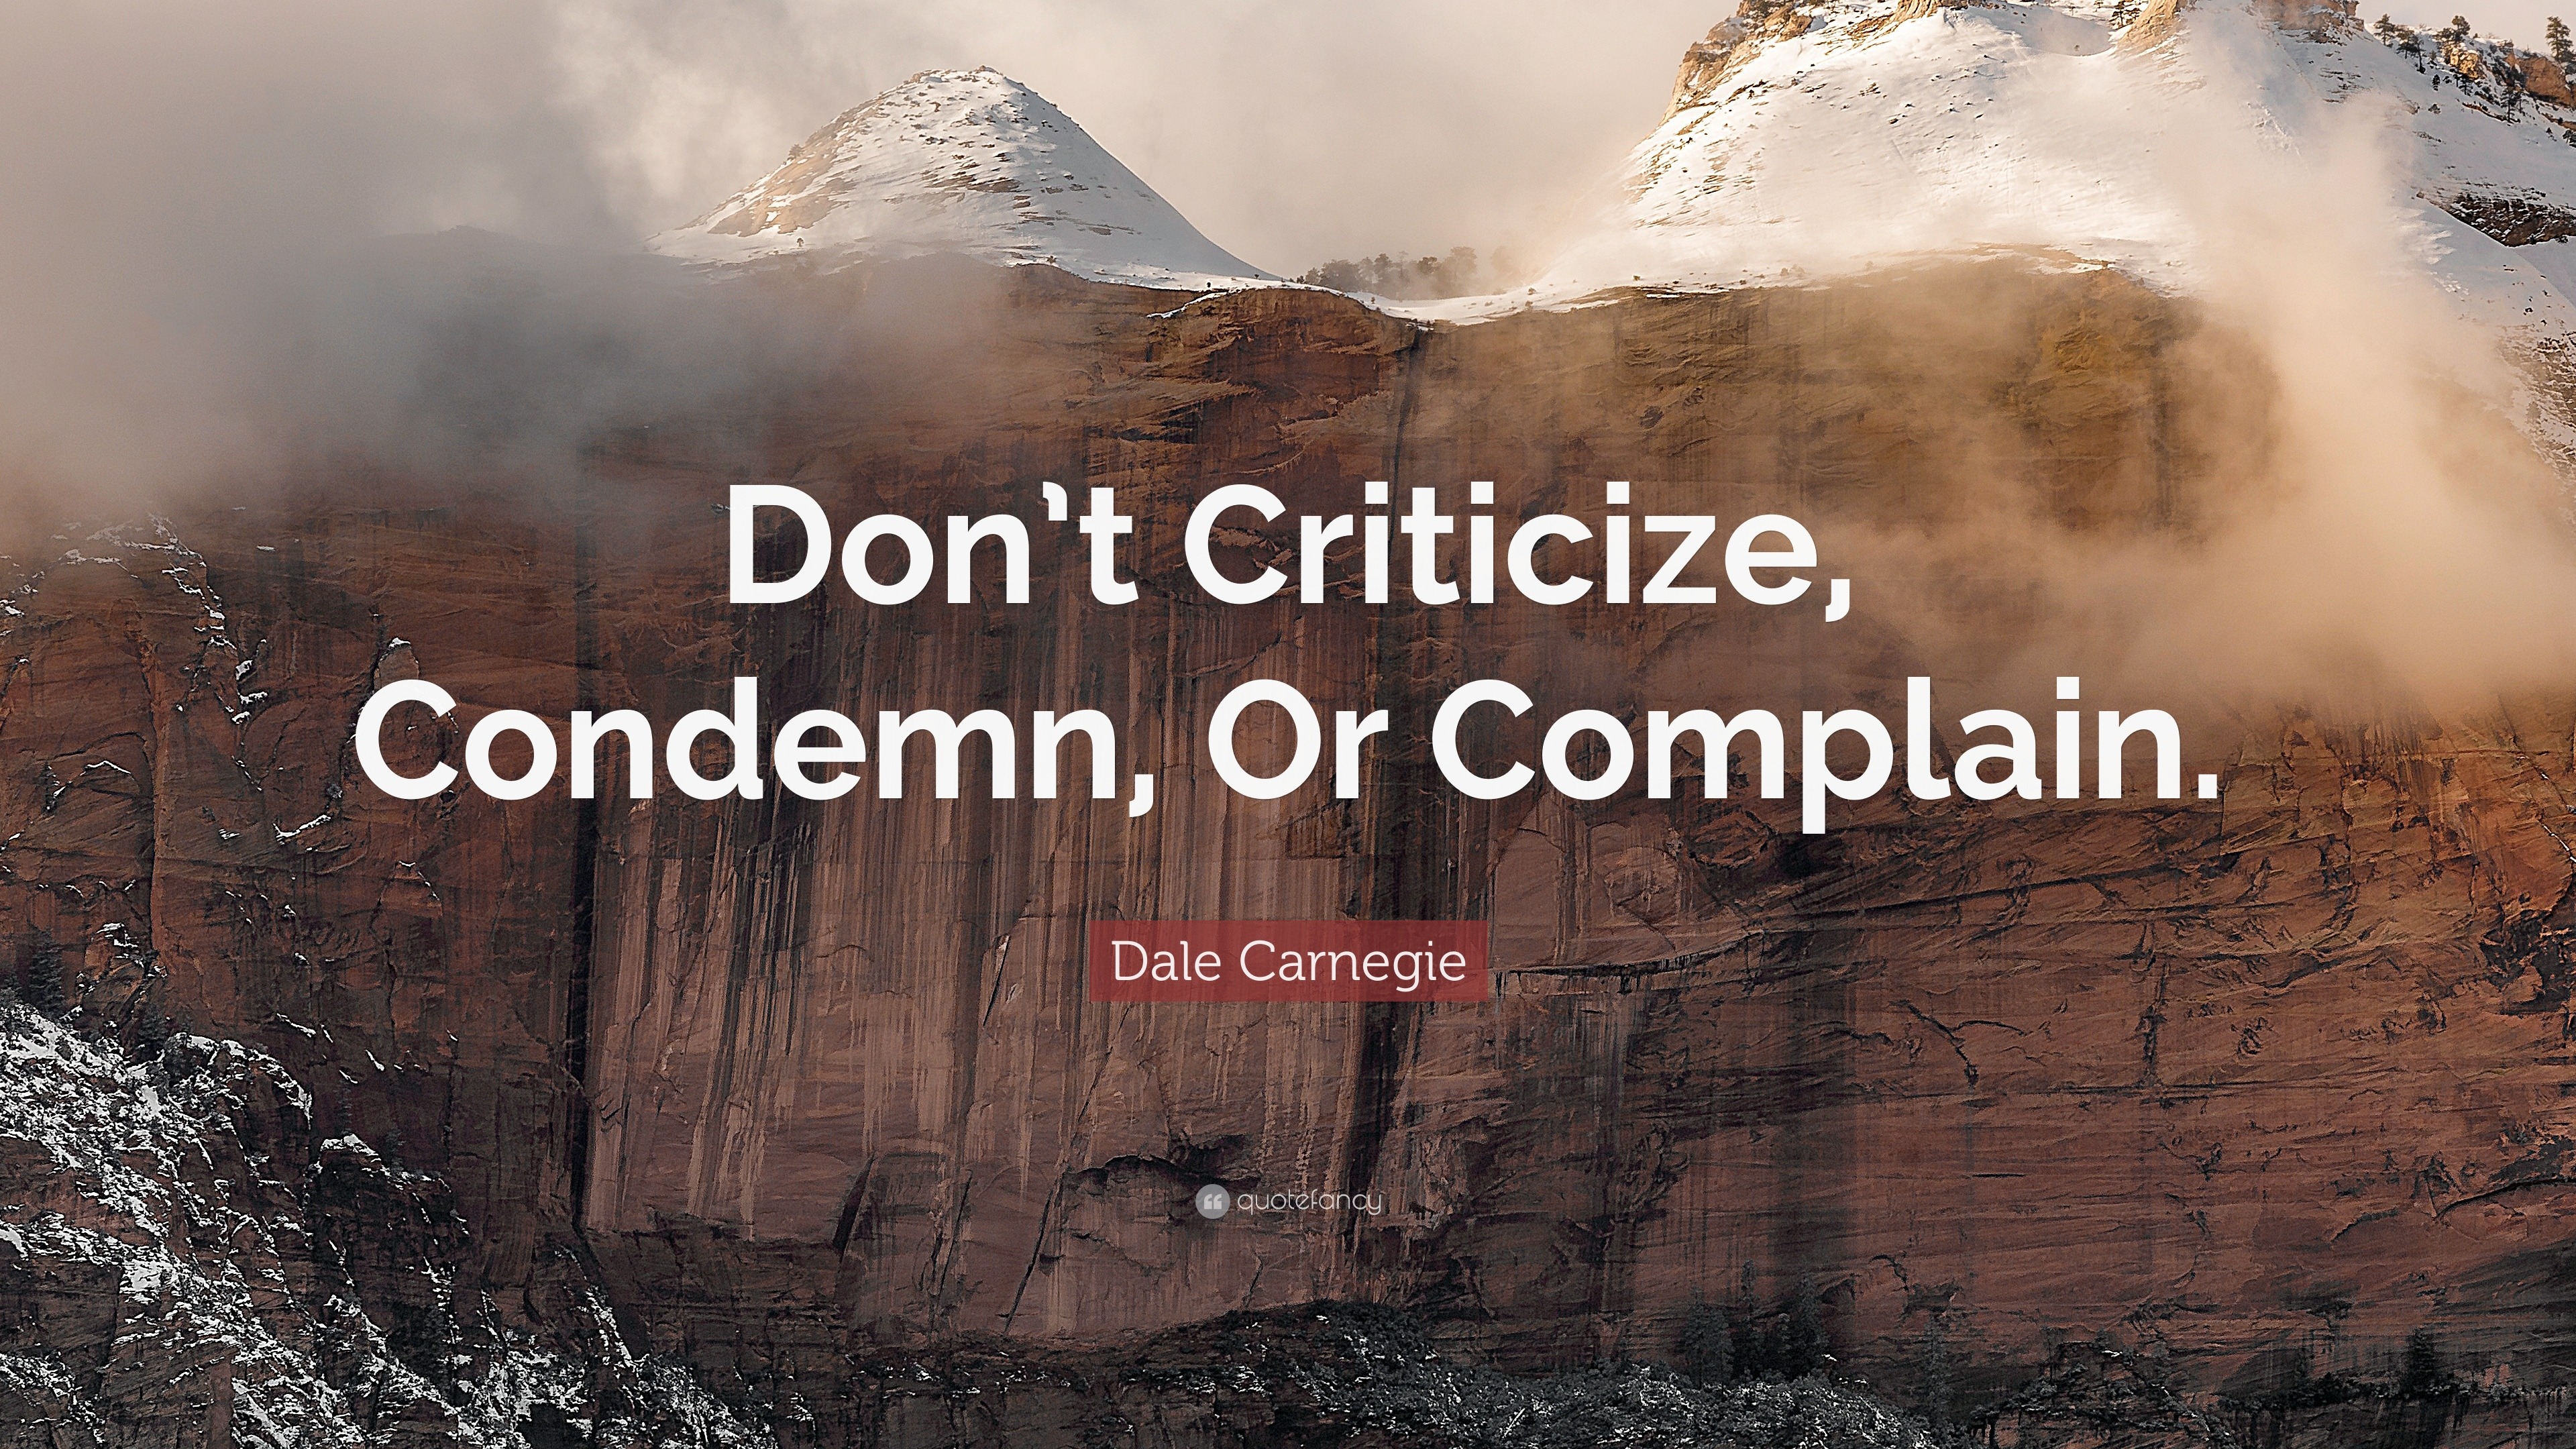 Dale Carnegie Quote: 